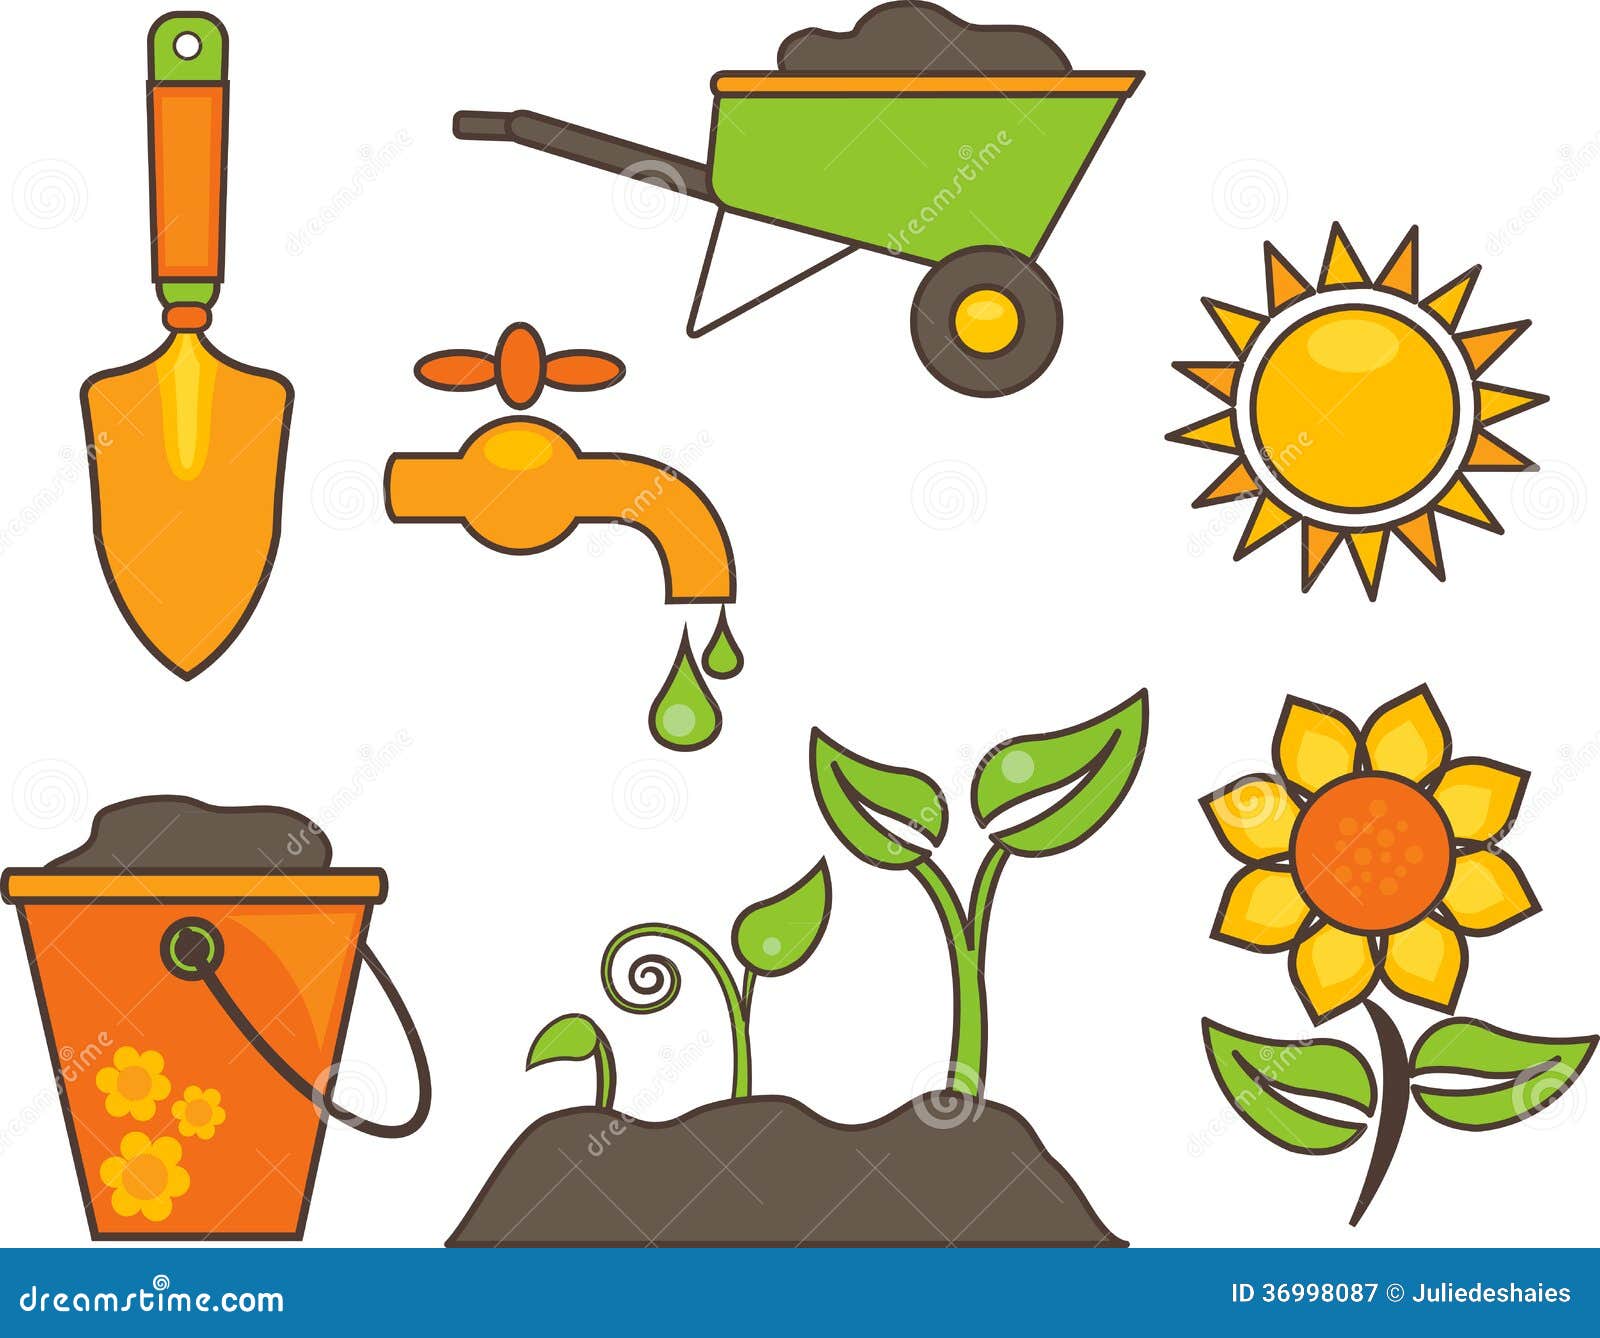 Gardening Equipment Illustration Stock Vector - Image: 36998087